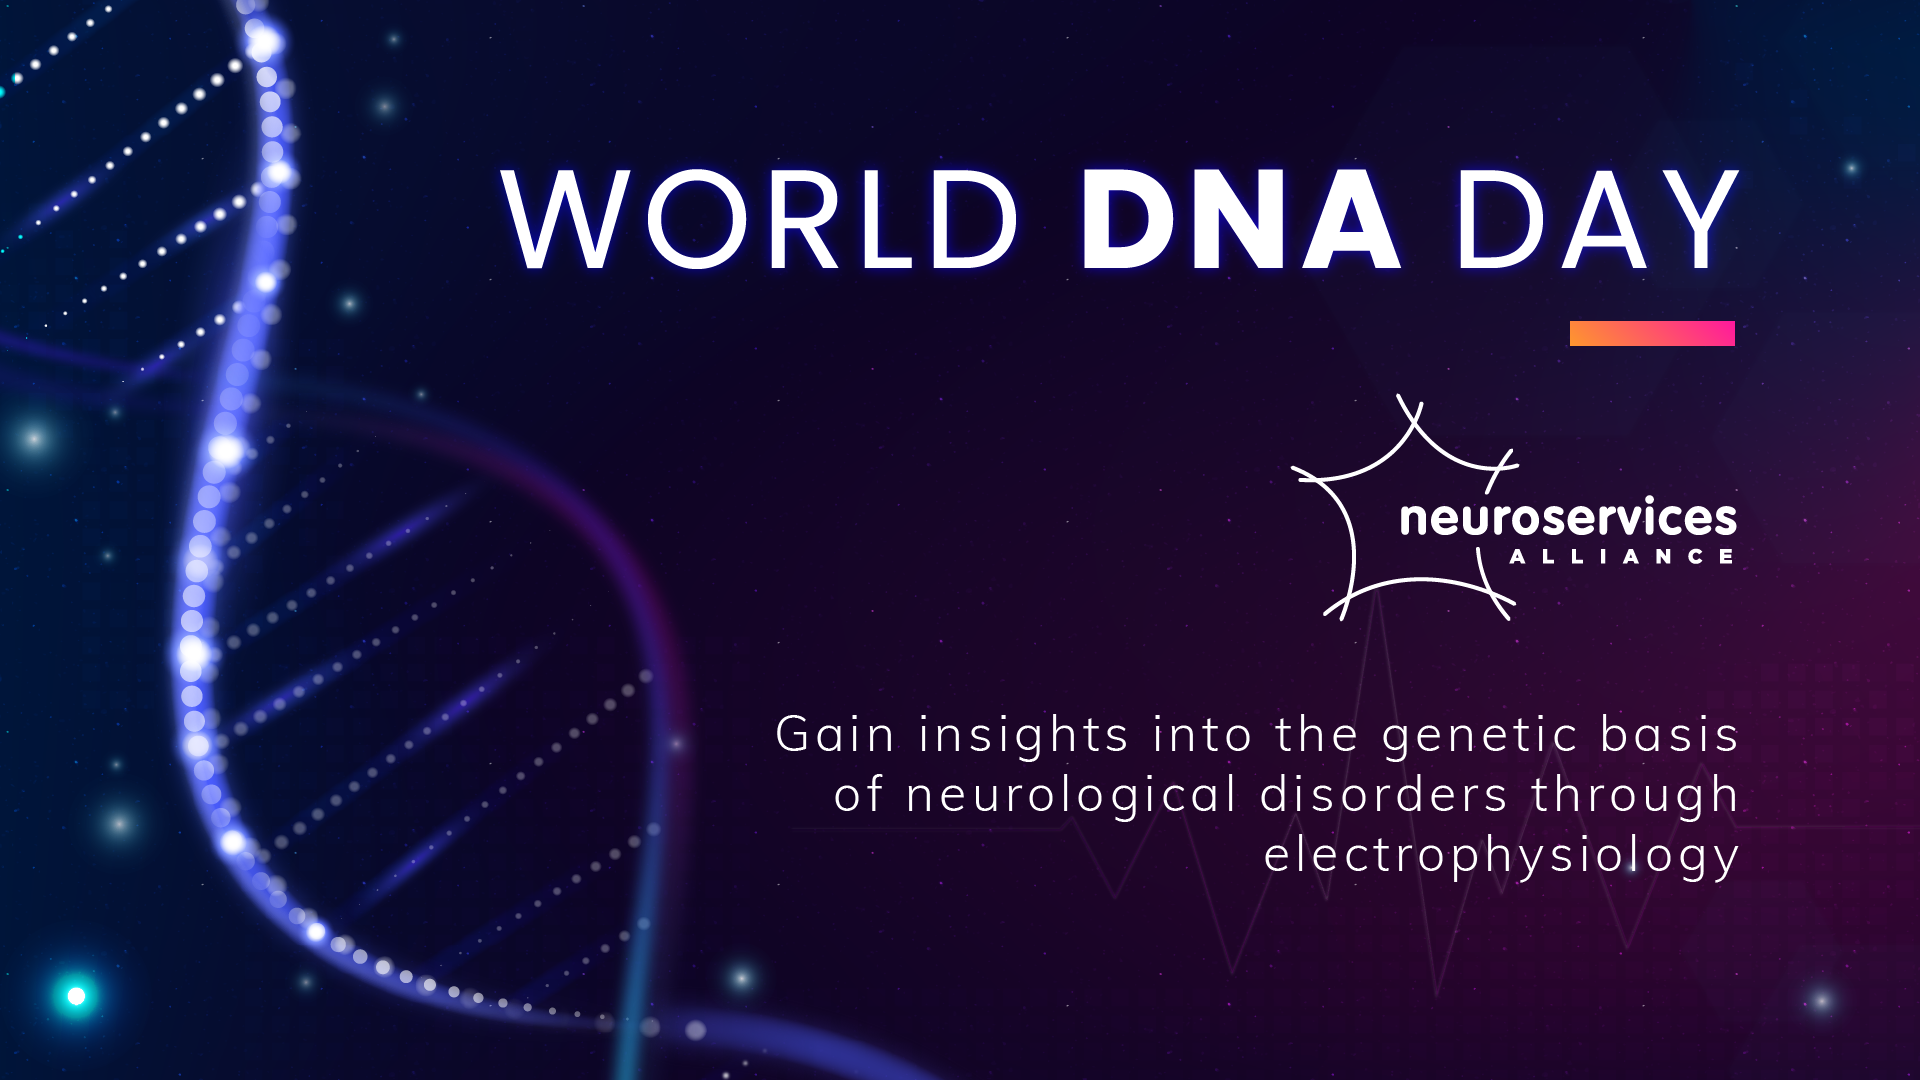 Neuroservices-Alliance support World DNA Day